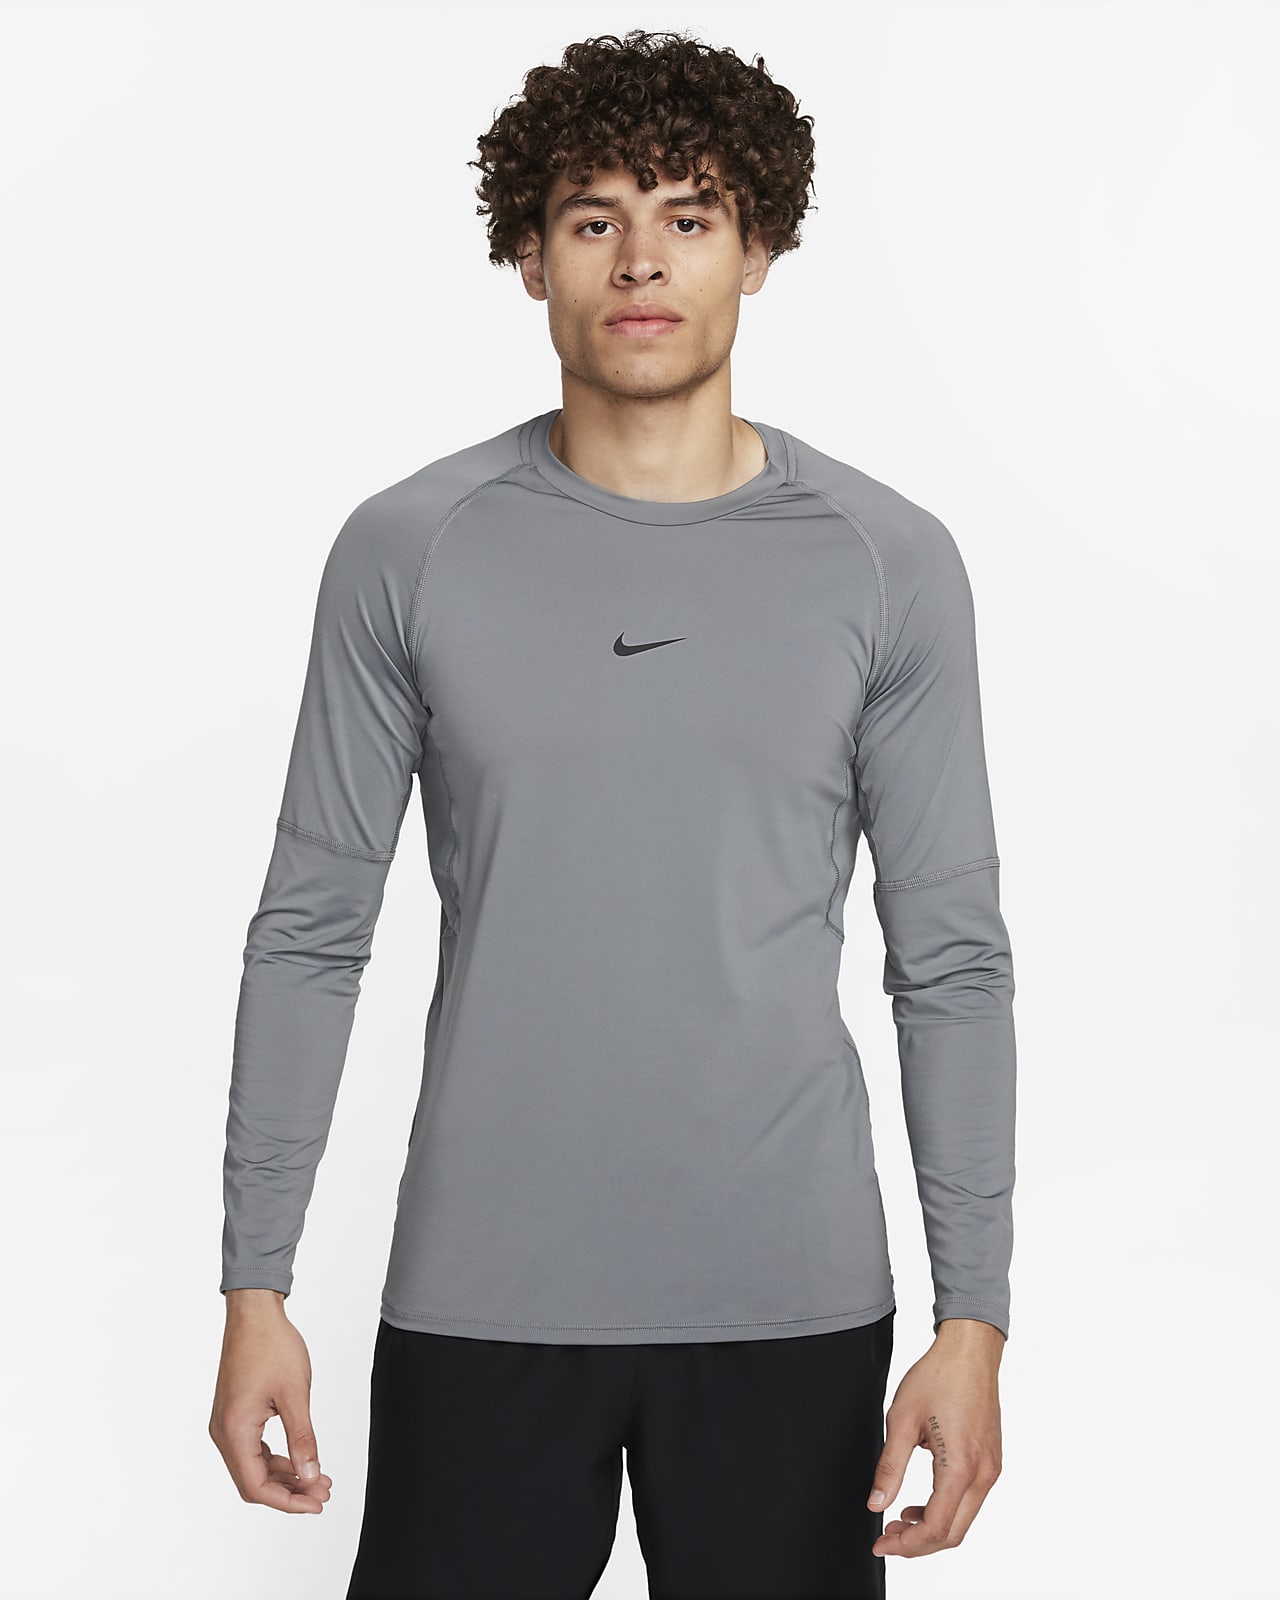 Escalera niebla Tranquilidad de espíritu Playera de fitness slim de manga larga Dri-FIT para hombre Nike Pro. Nike .com